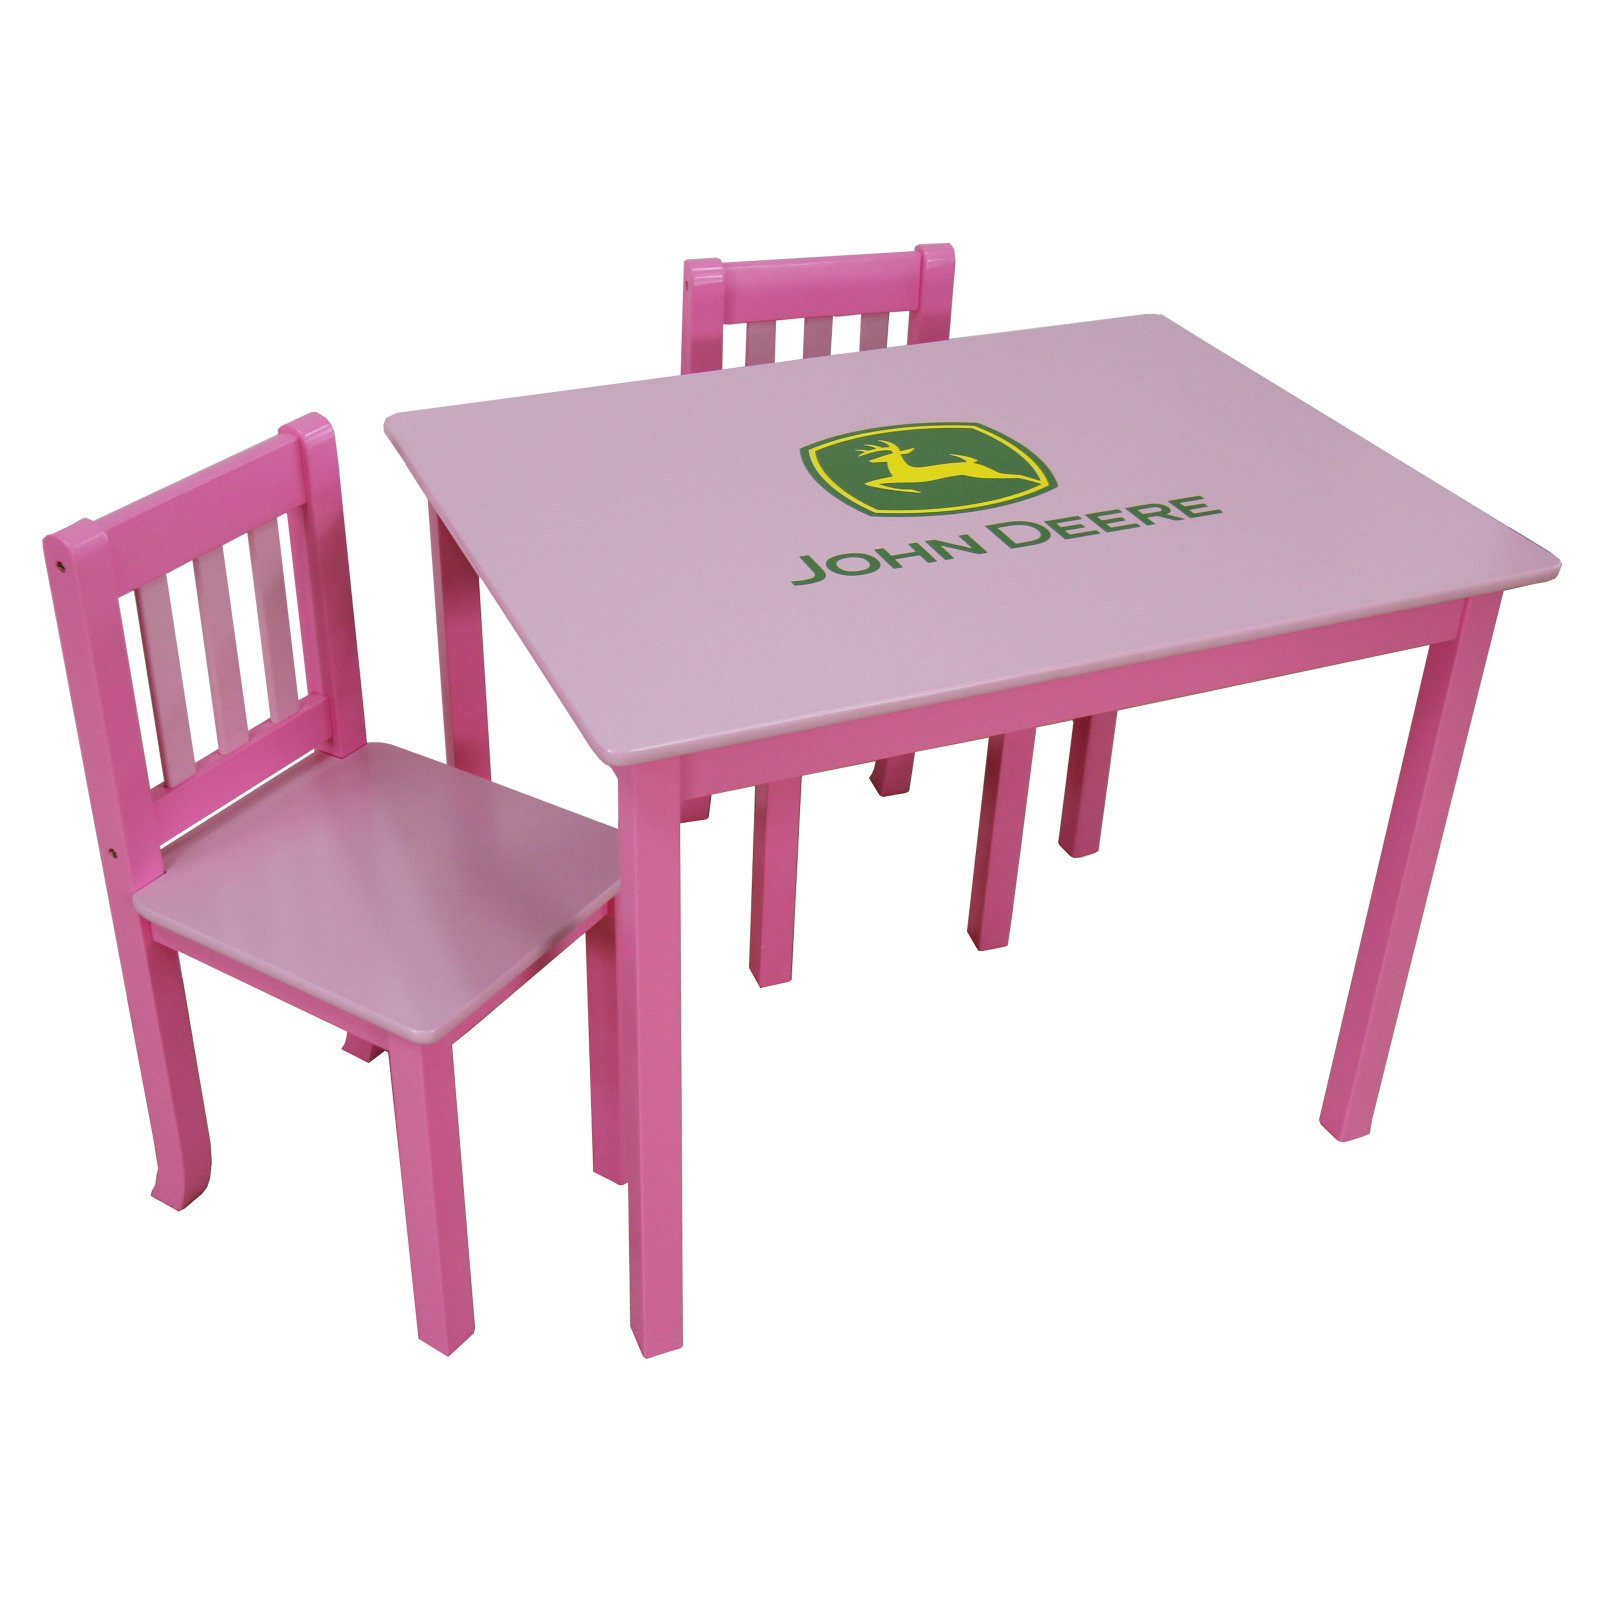 Walmart Kids Table Set
 John Deere Kids Table & Chairs Set Multiple Colors